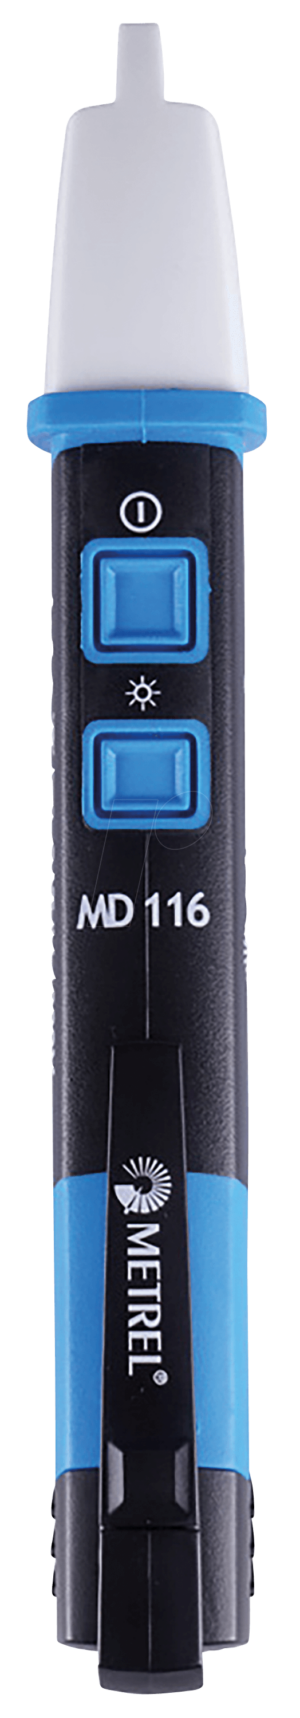 MD 116 - Spannungsprüfer MD 116